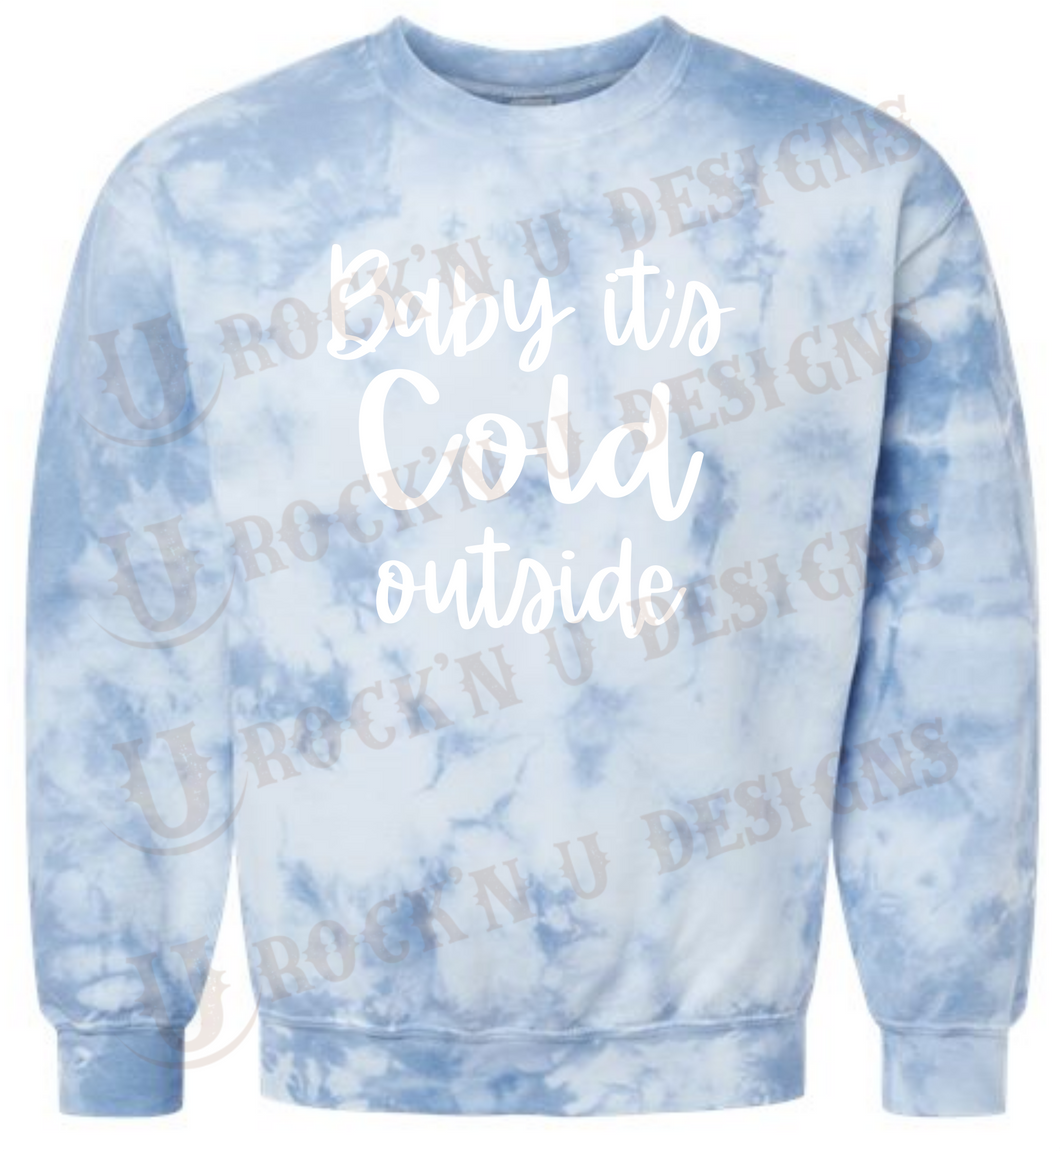 Baby It's Cold Outside - Unisex Graphic Sweatshirt by Rock'n u Designs